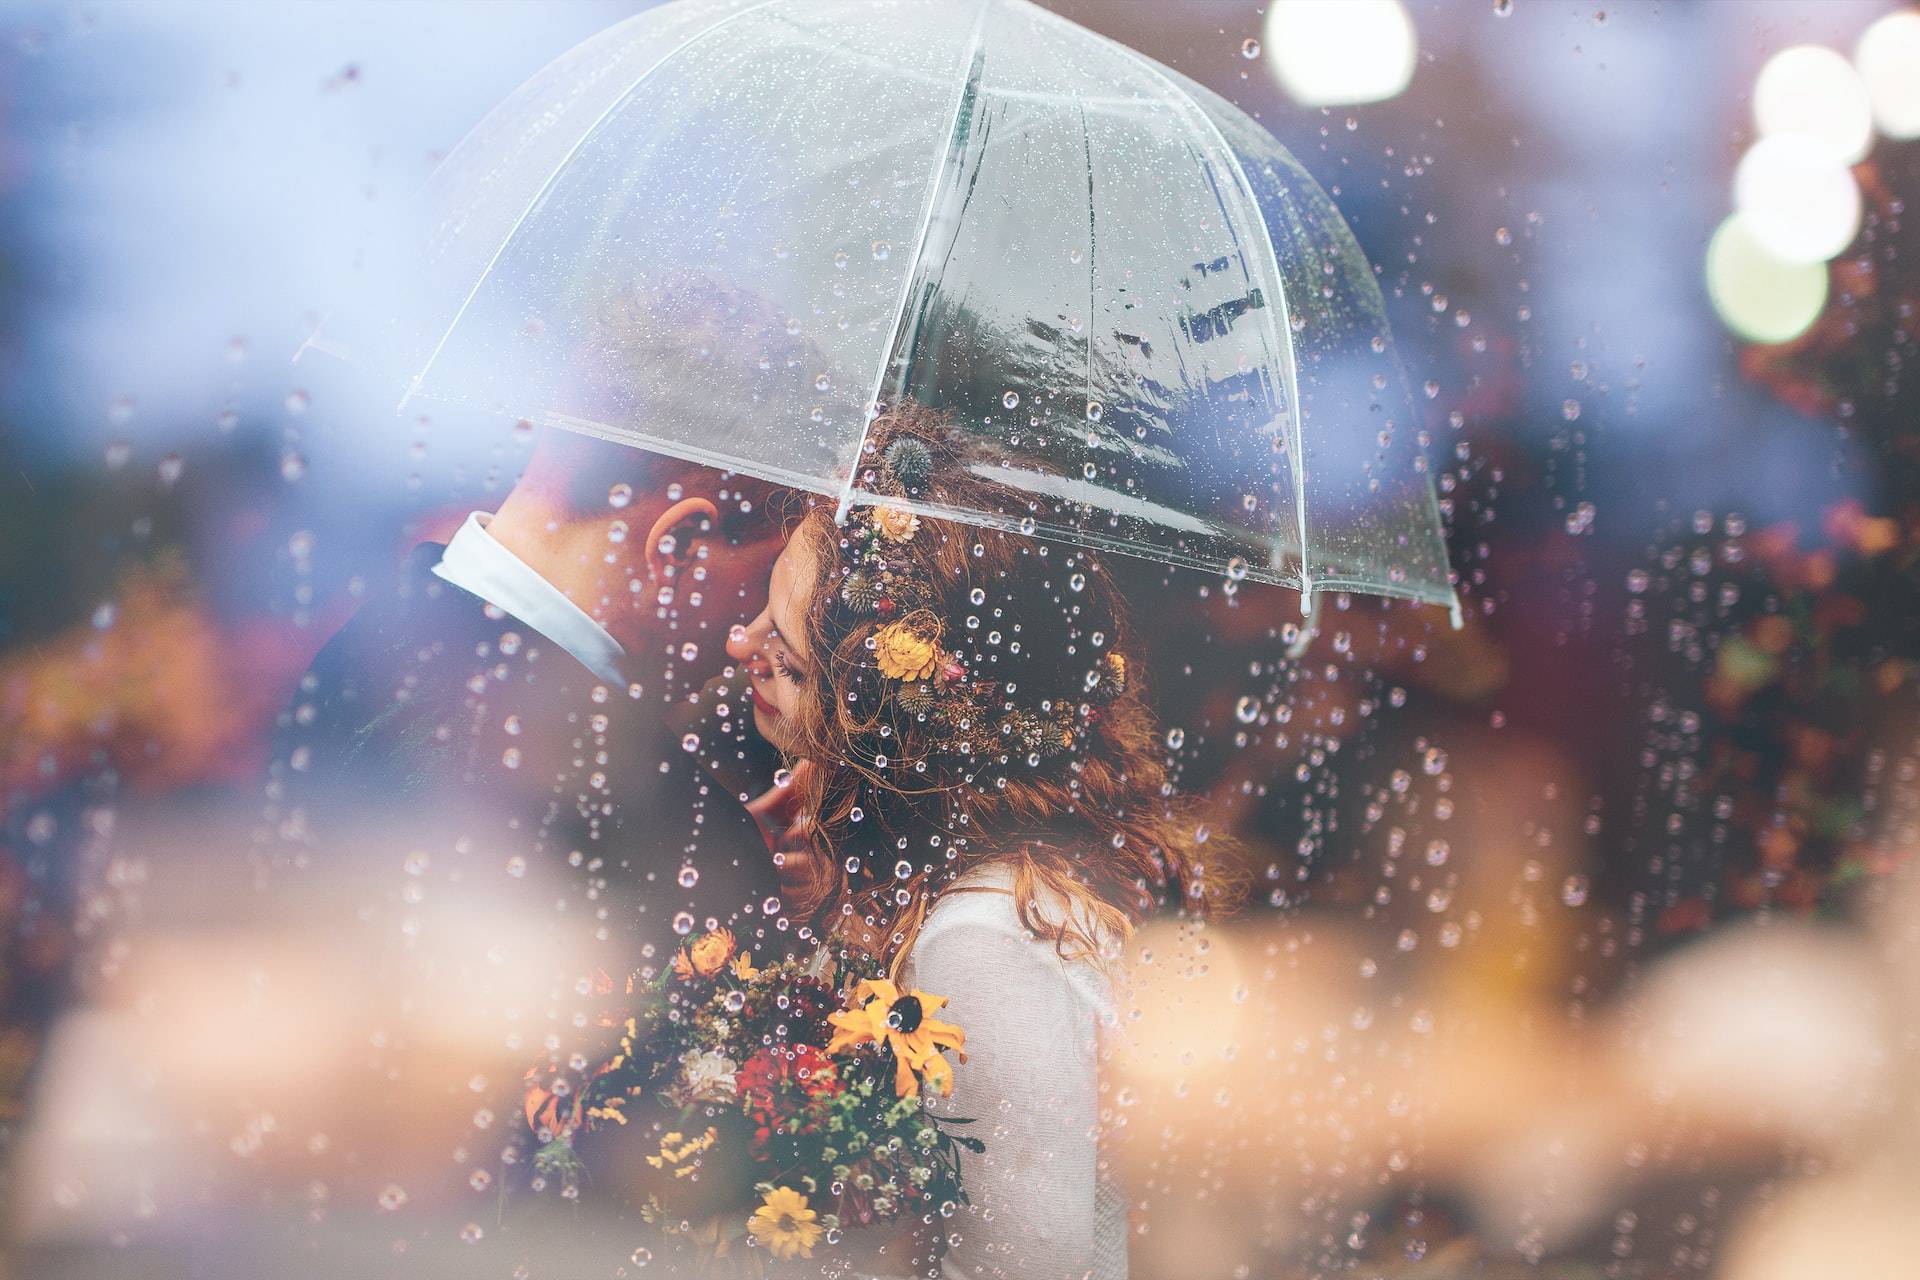 Rainy wedding day. Image by Joel Overbeck on Unsplash.